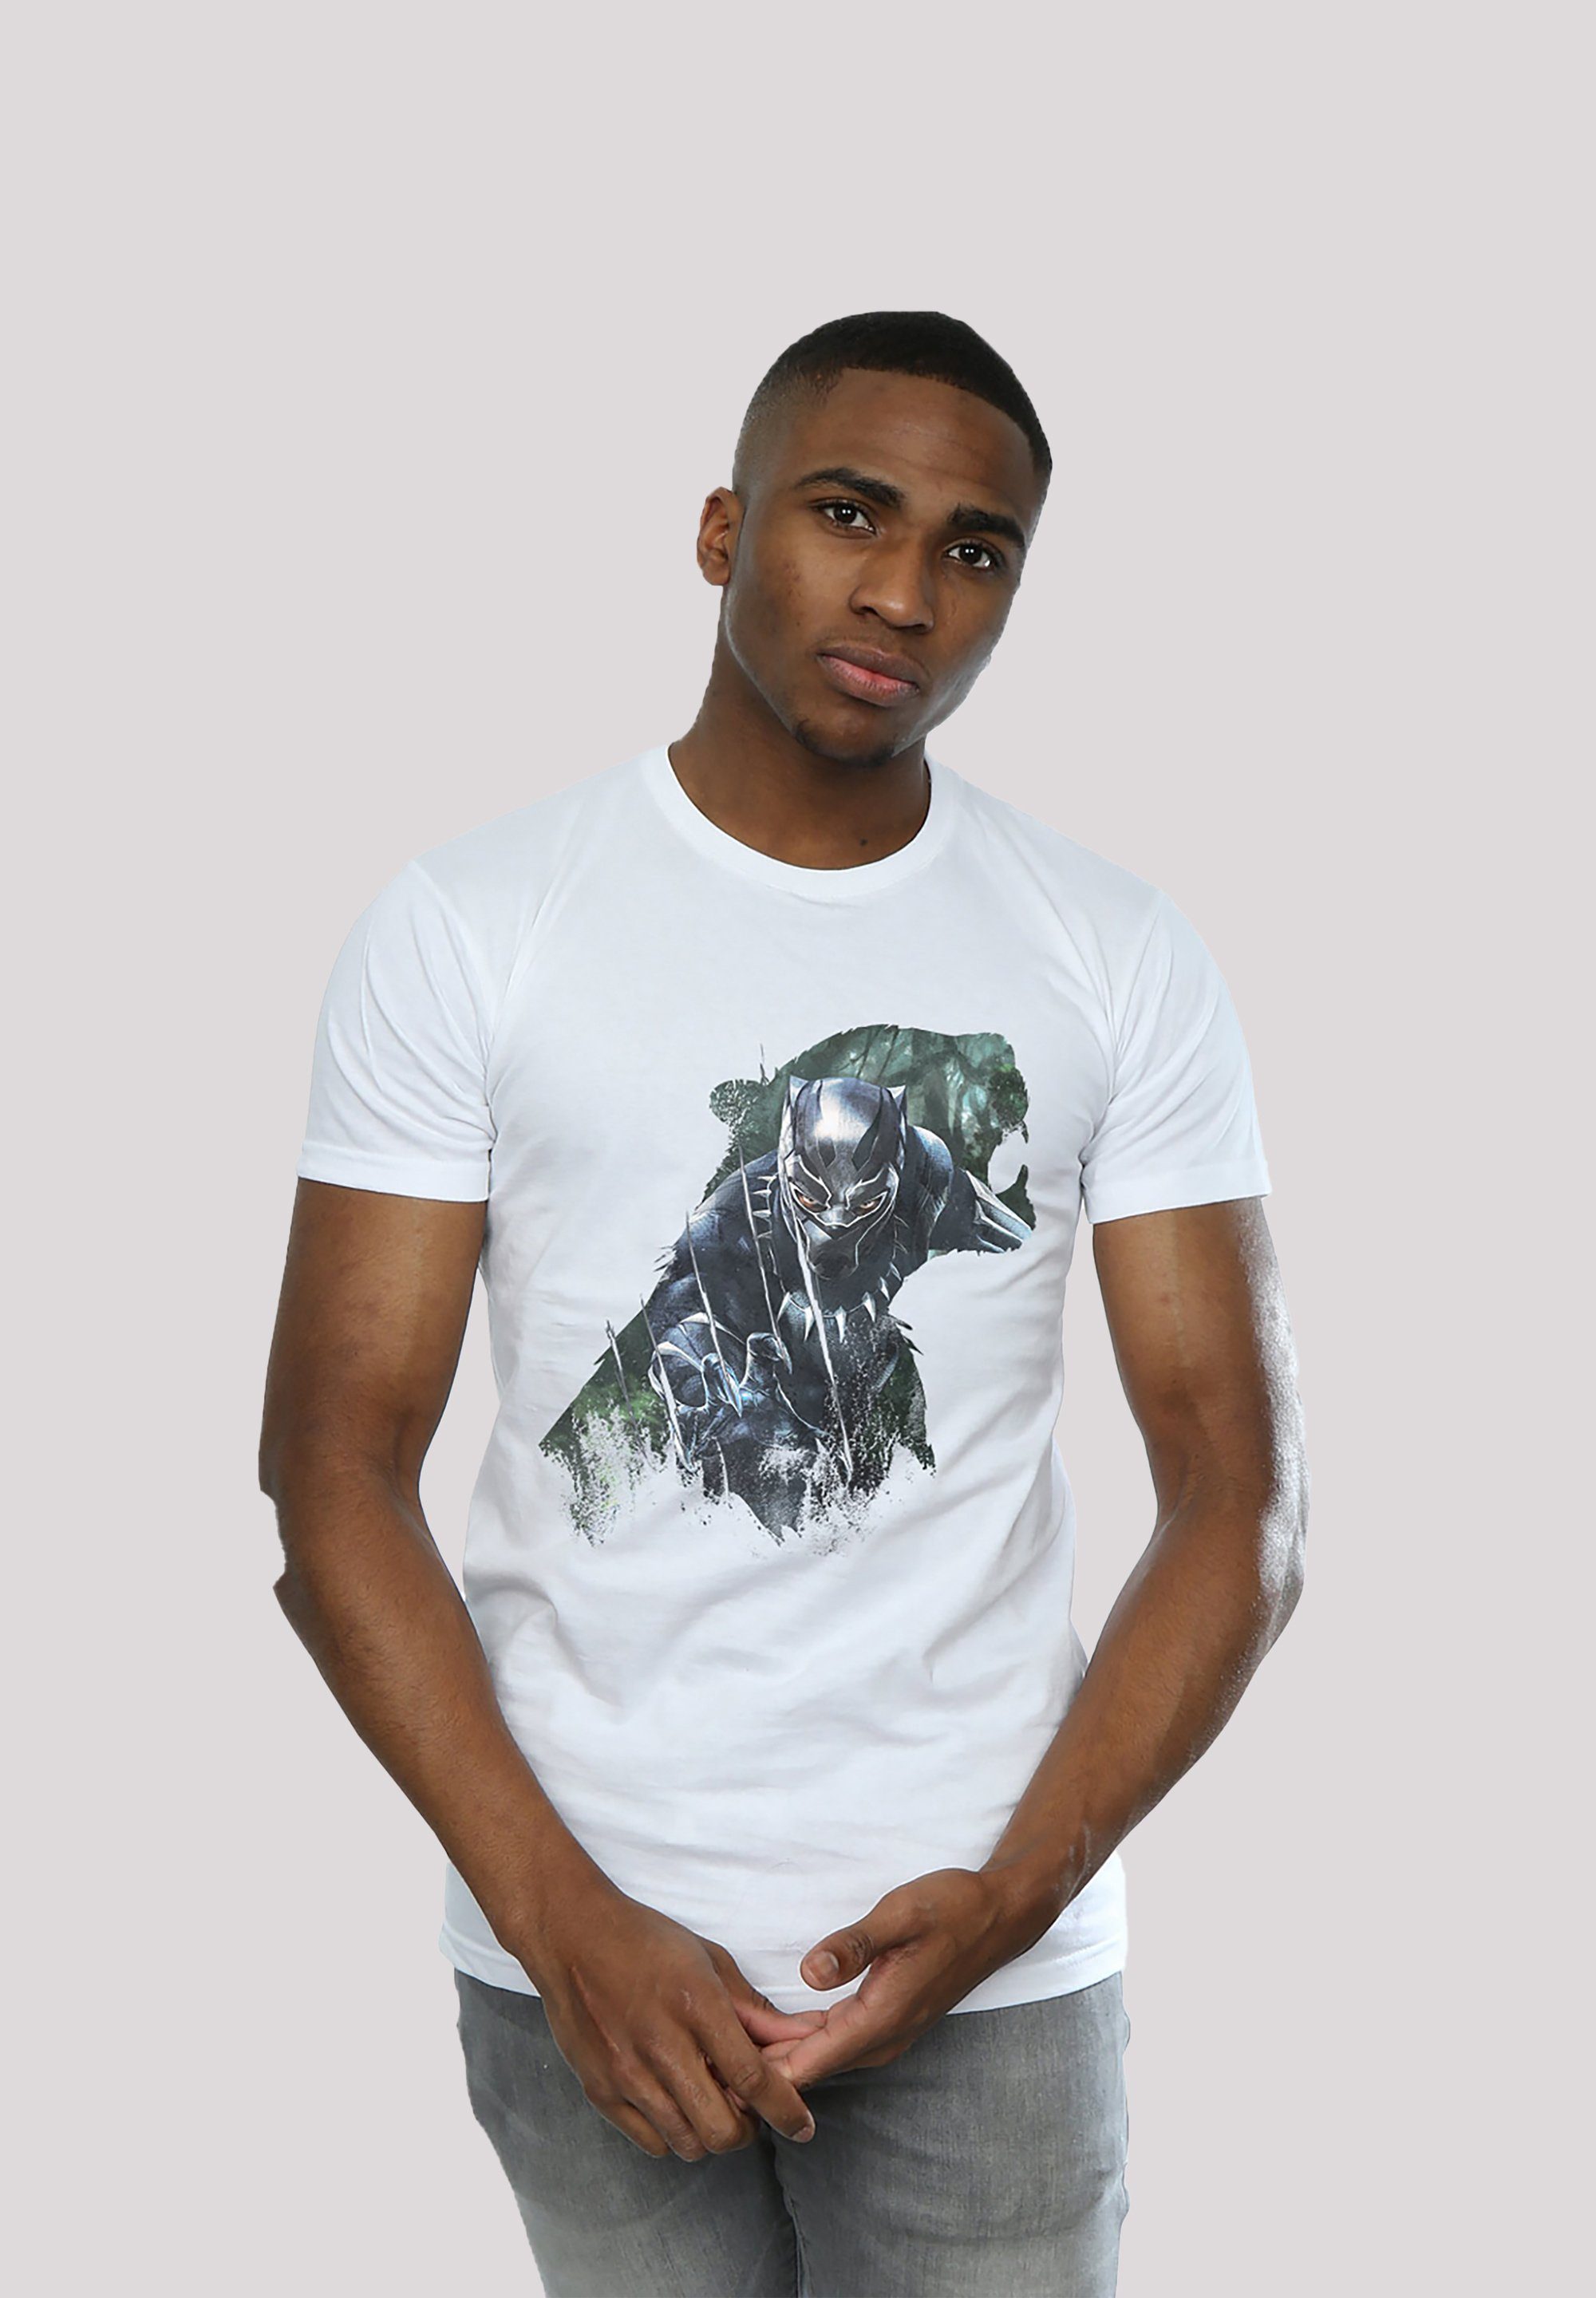 F4NT4STIC T-Shirt Panther Print Wild Marvel Black Sillhouette weiß